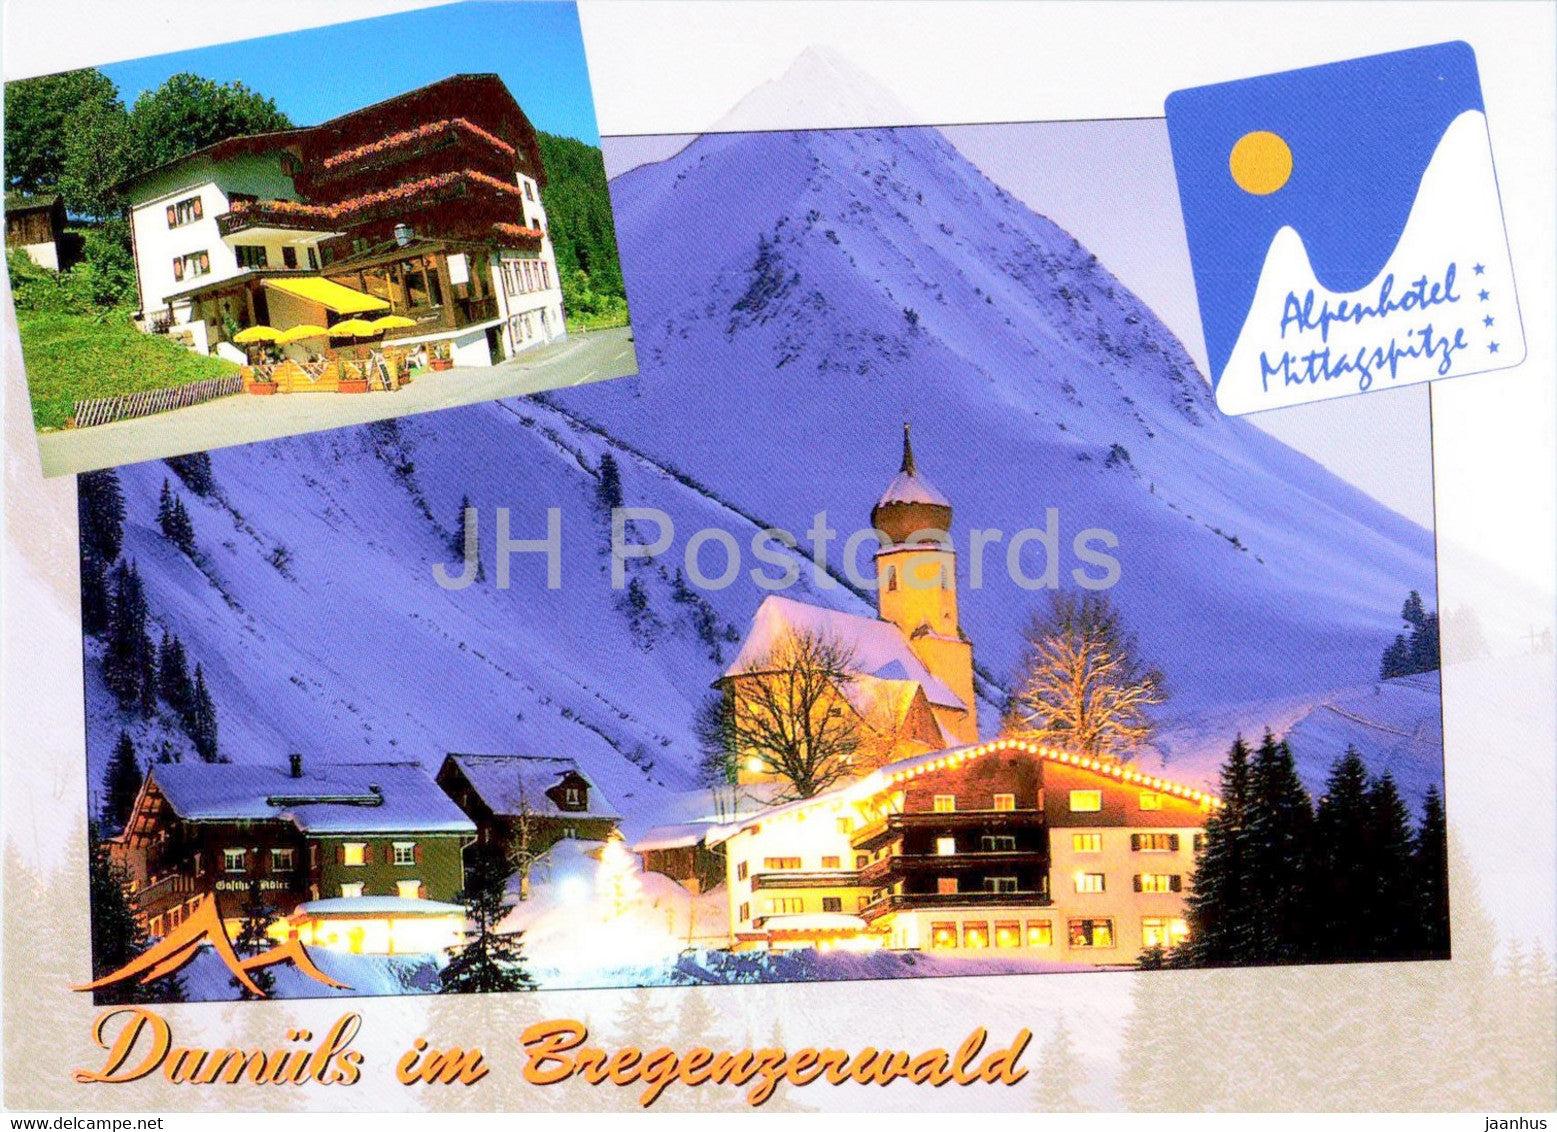 Alpenhotel Mittagspitze - Damuls - hotel - Austria - used - JH Postcards